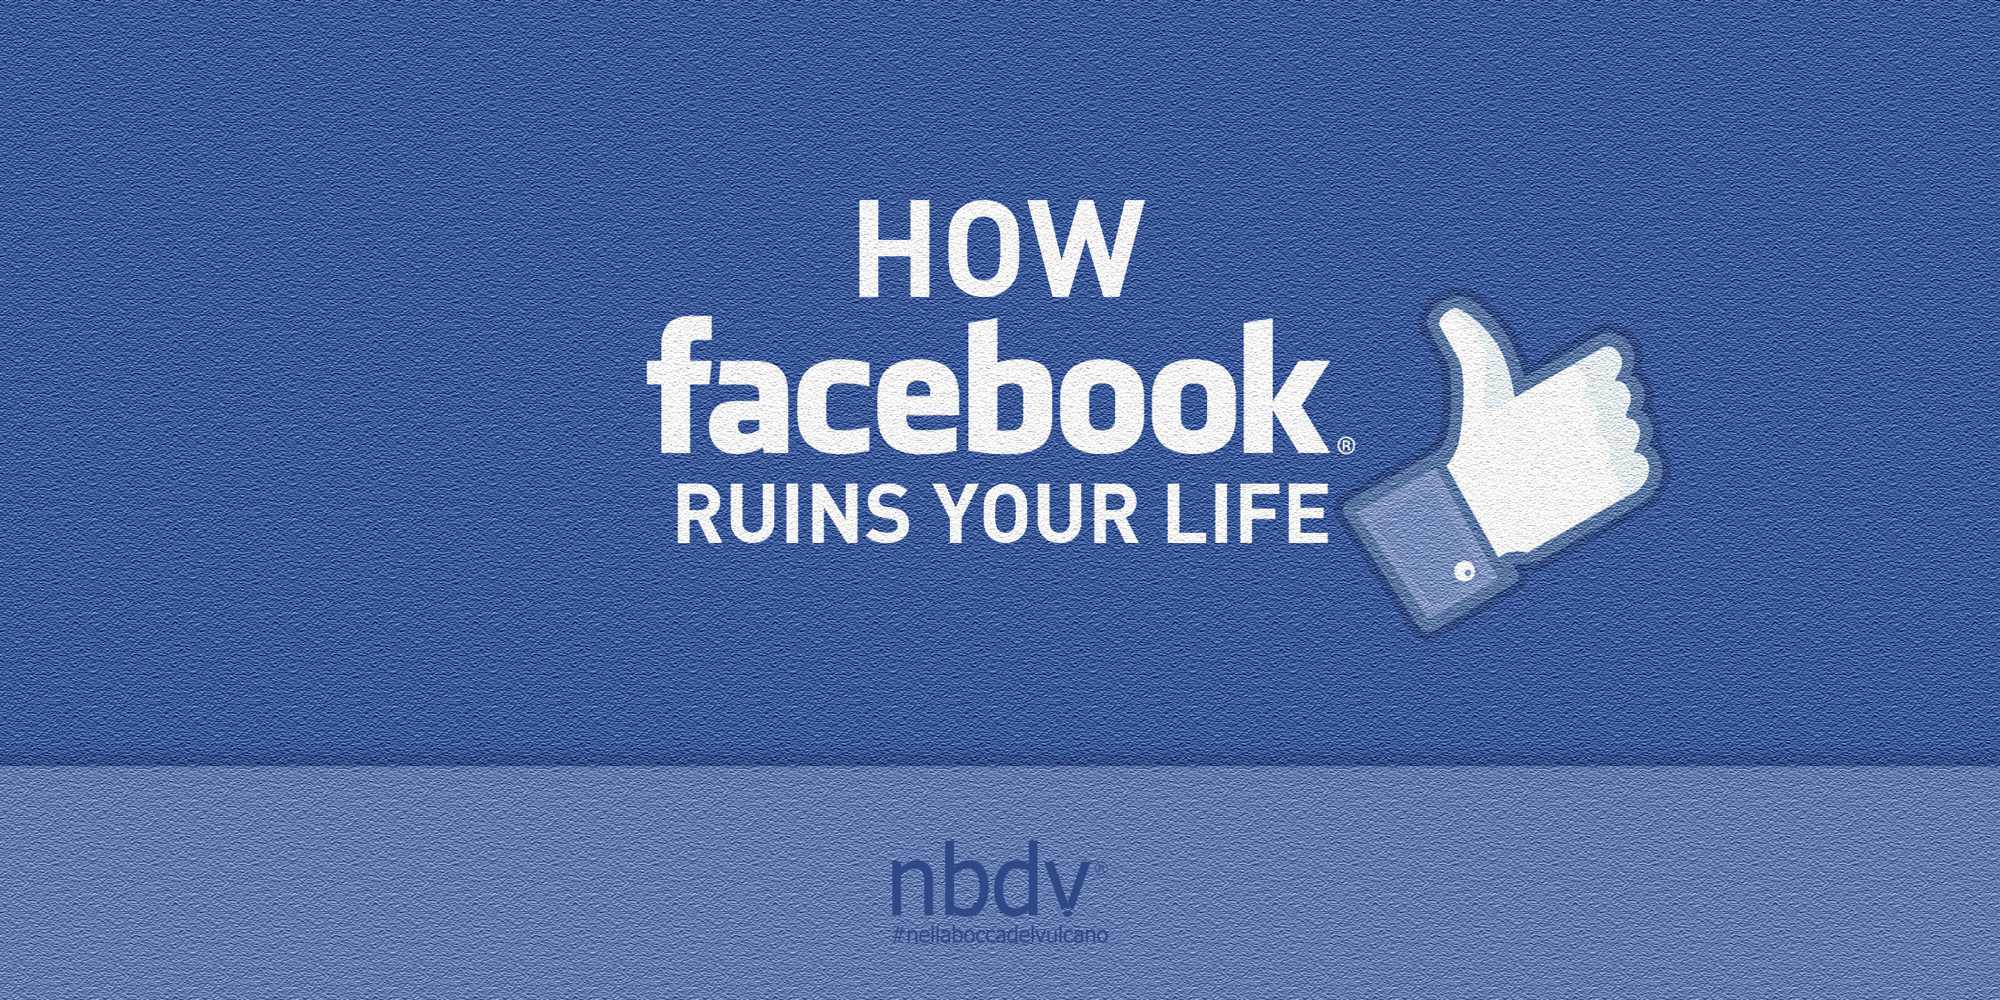 facebook-life-napoli-nbdv